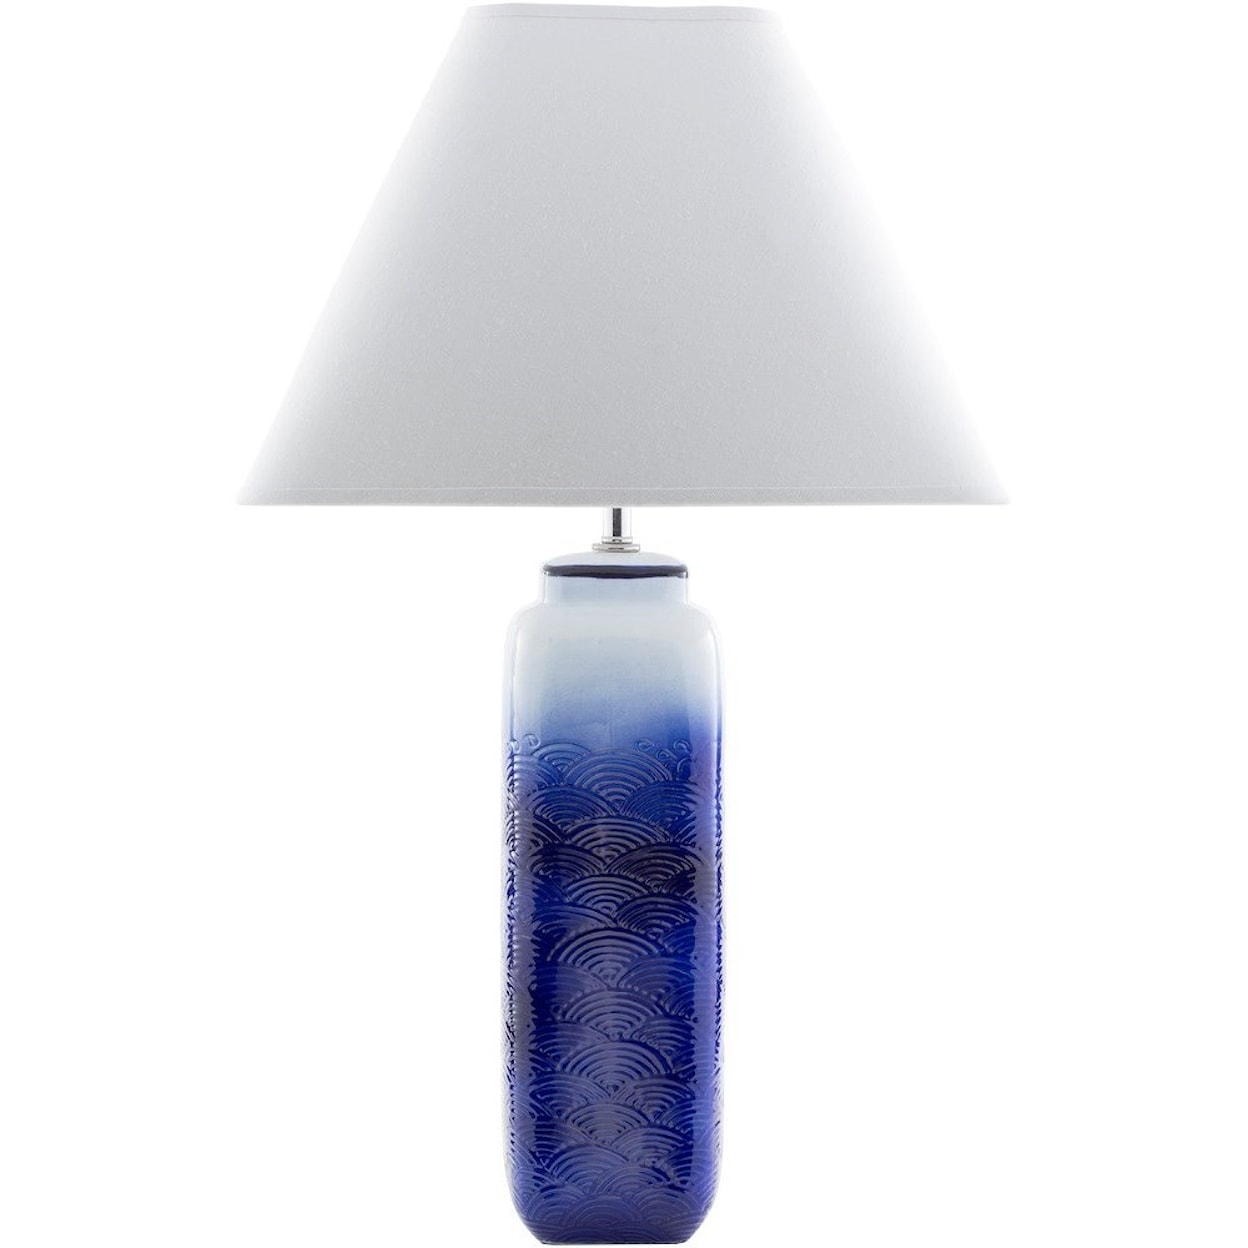 Surya Azul Ombre Blue Modern Table Lamp